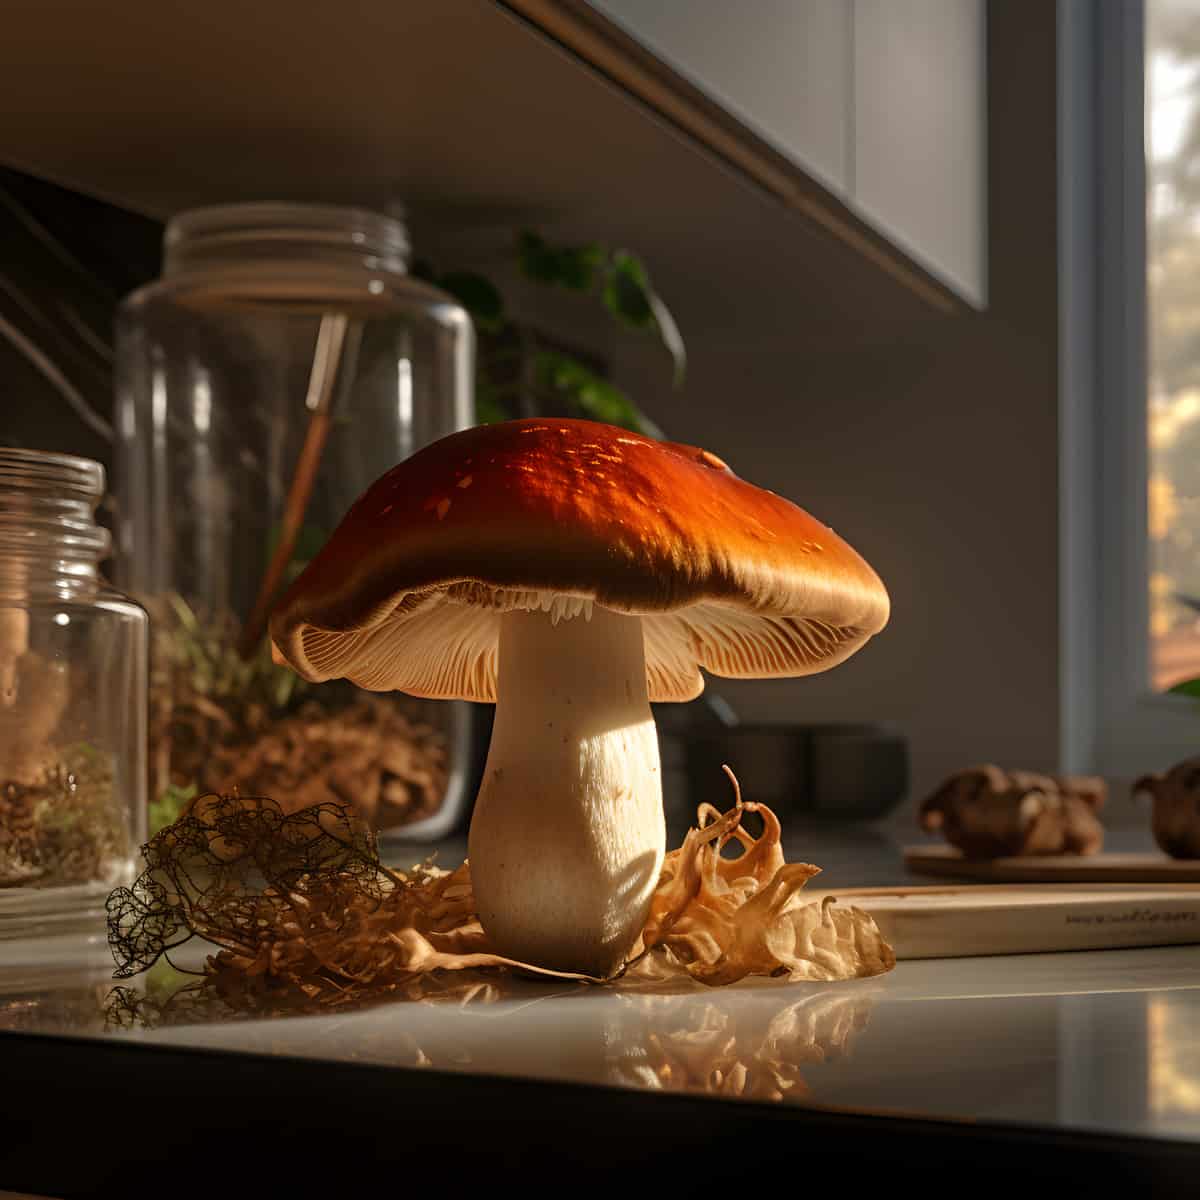 Chestnut Mushrooms on a kitchen counter